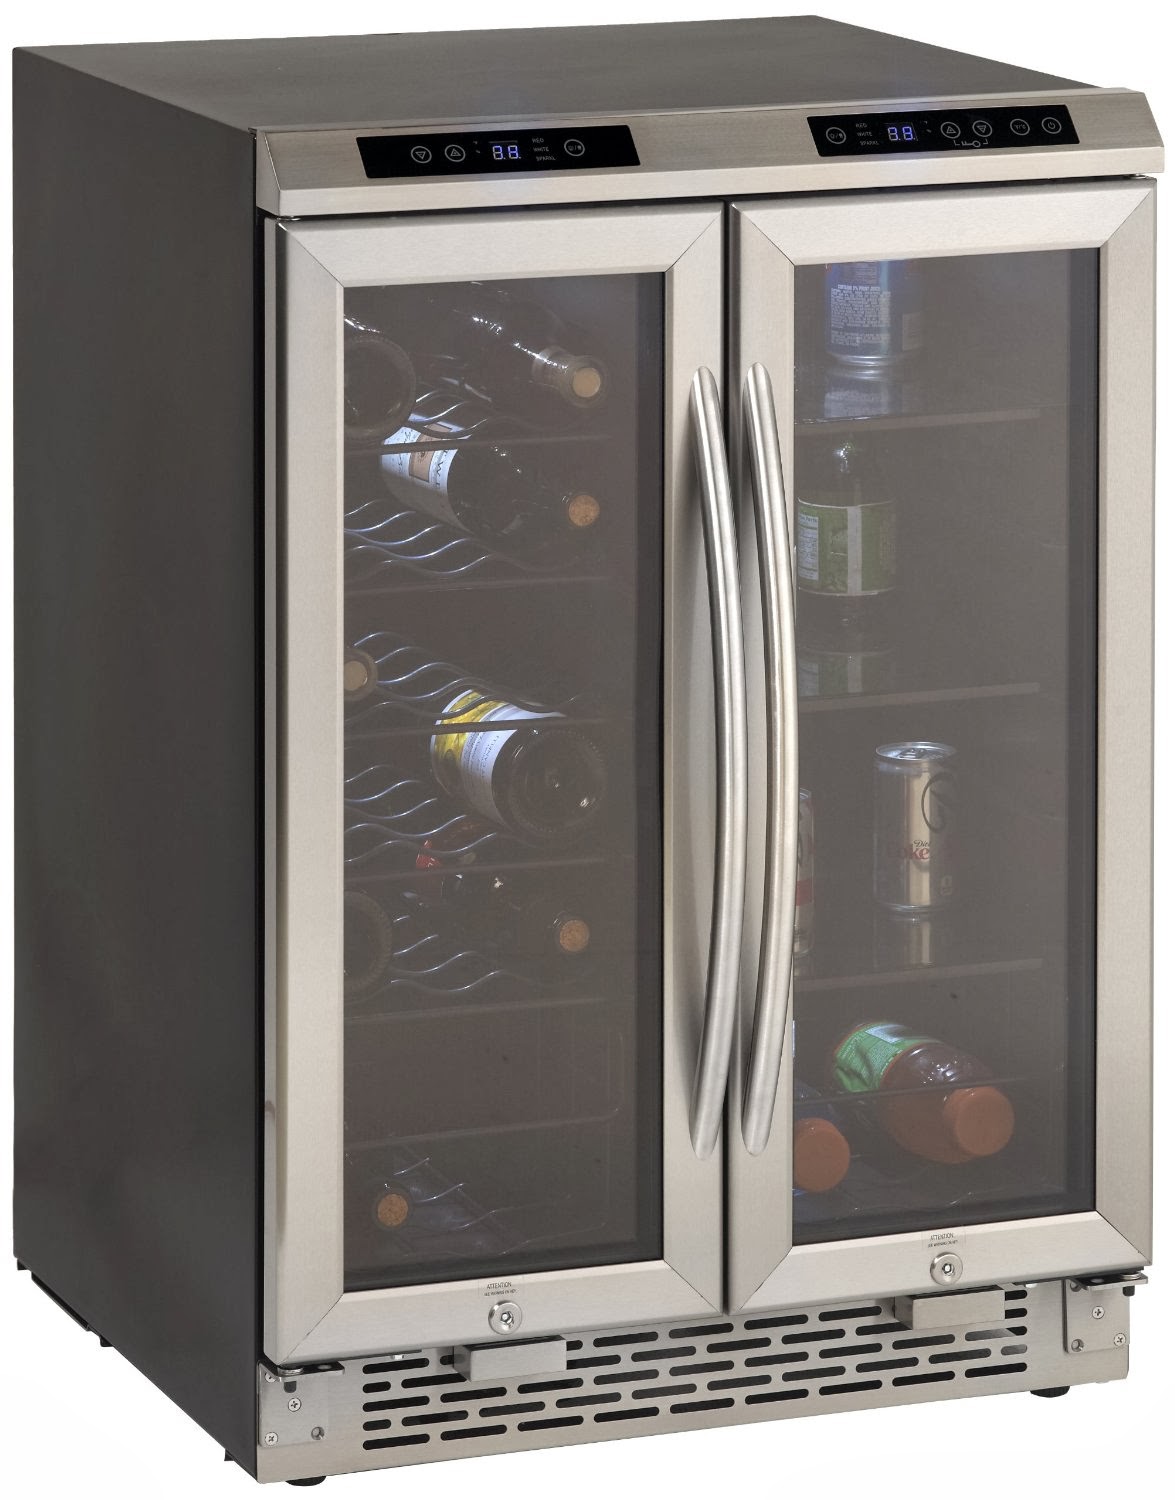 Buying Avanti Refrigerator With Online Store: Avanti Side By Side